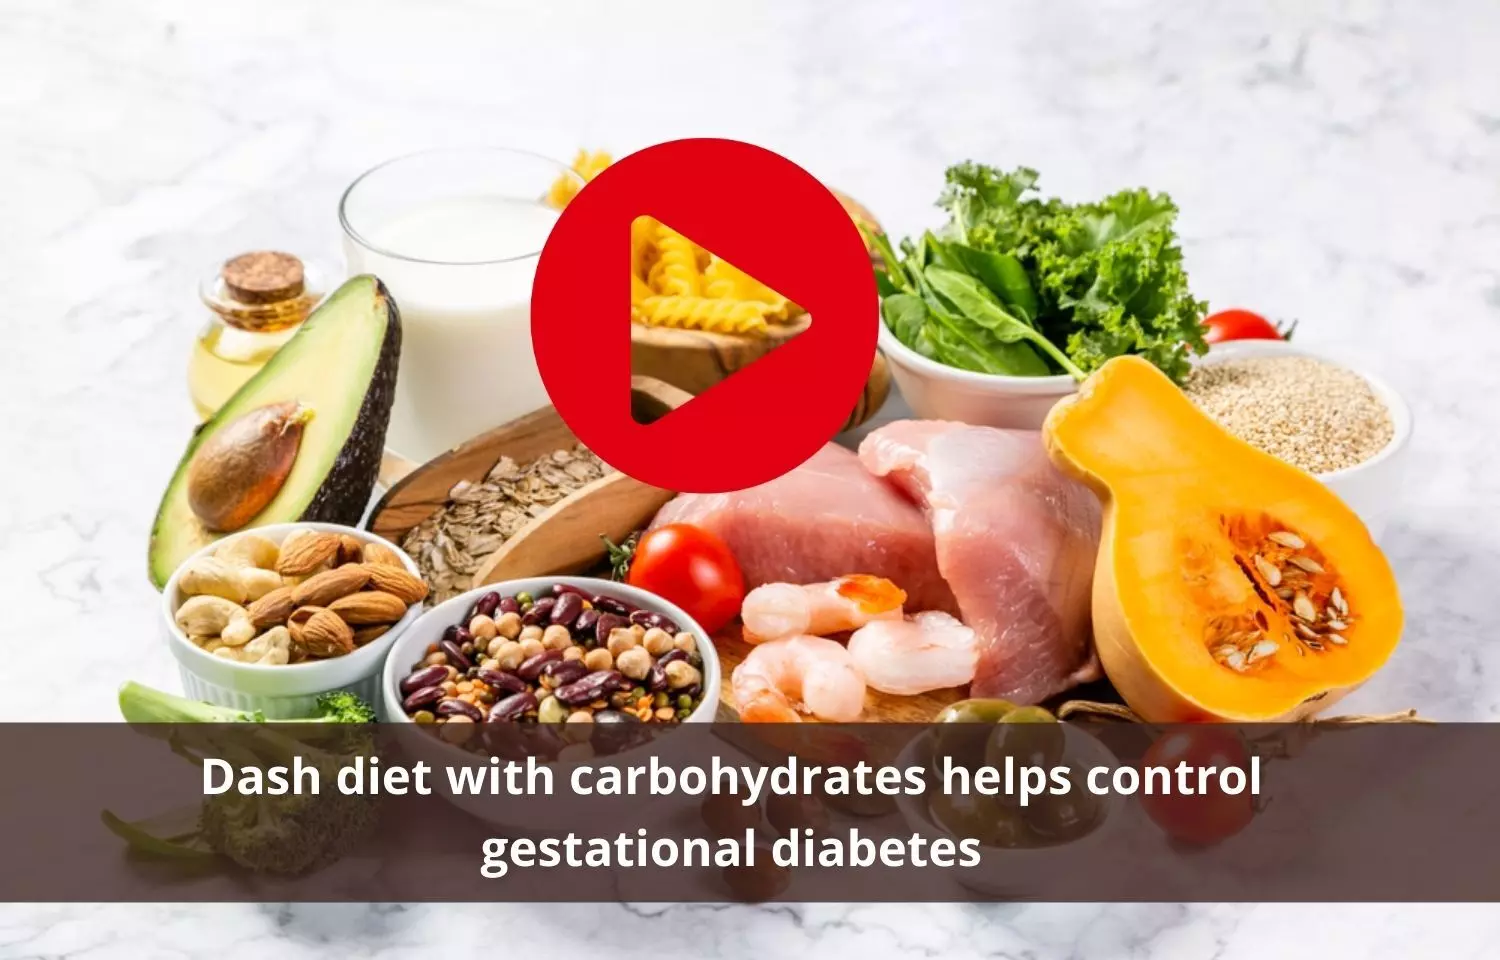 Dash diet effective in controlling gestational diabetes